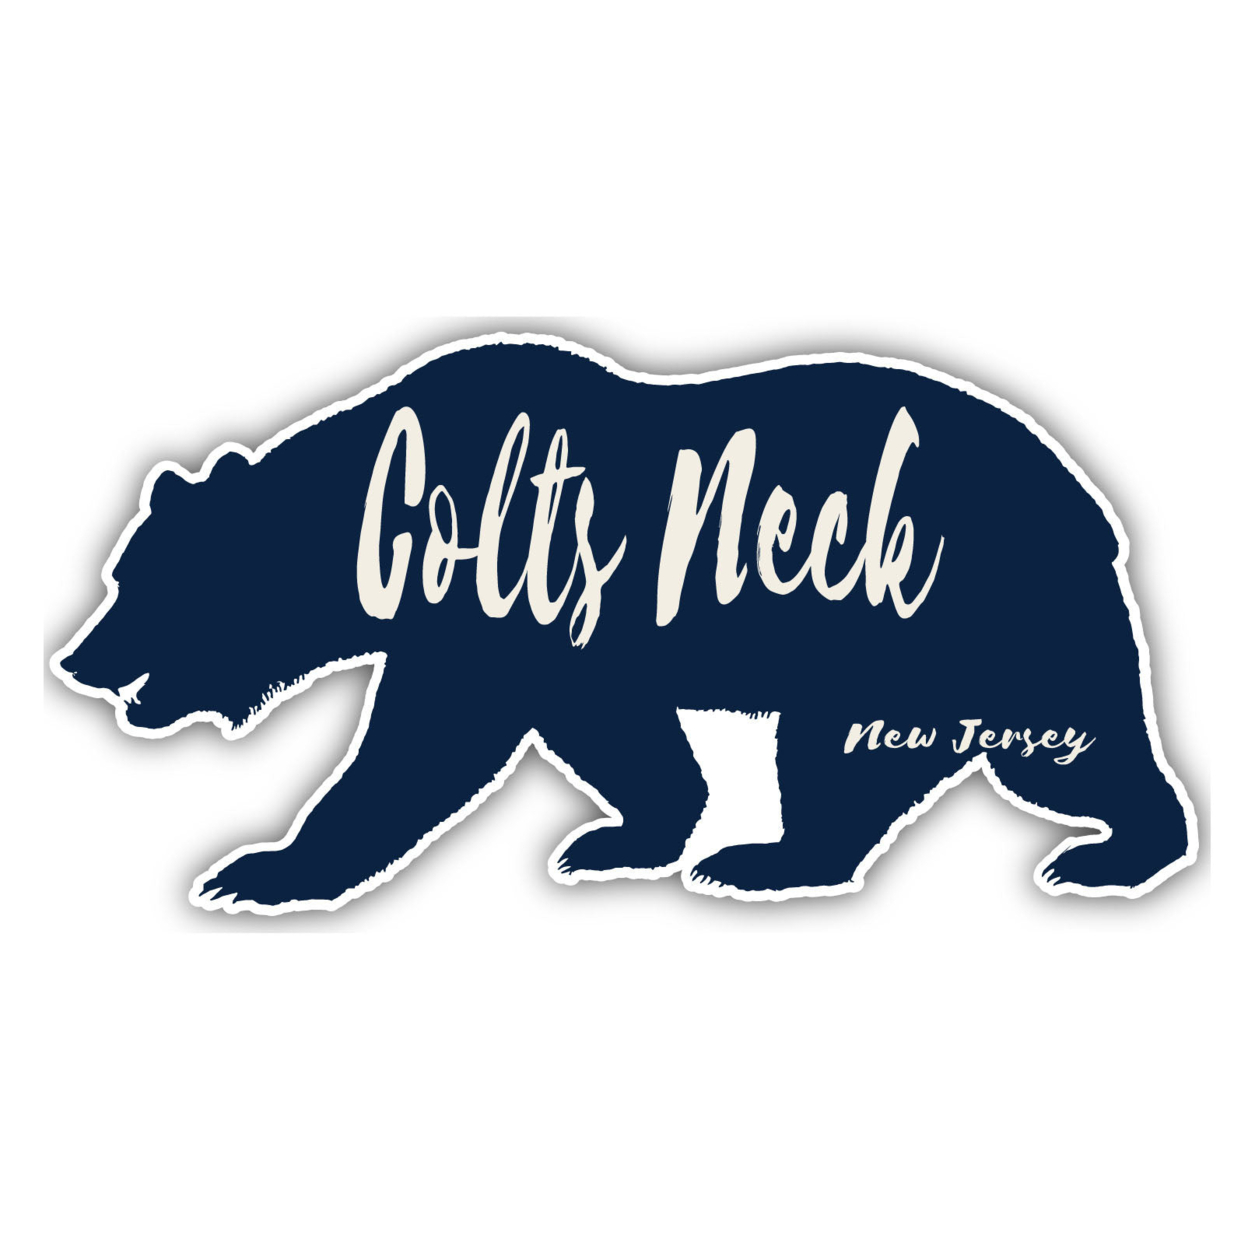 Colts Neck New Jersey Souvenir Decorative Stickers (Choose Theme And Size) - Single Unit, 10-Inch, Bear